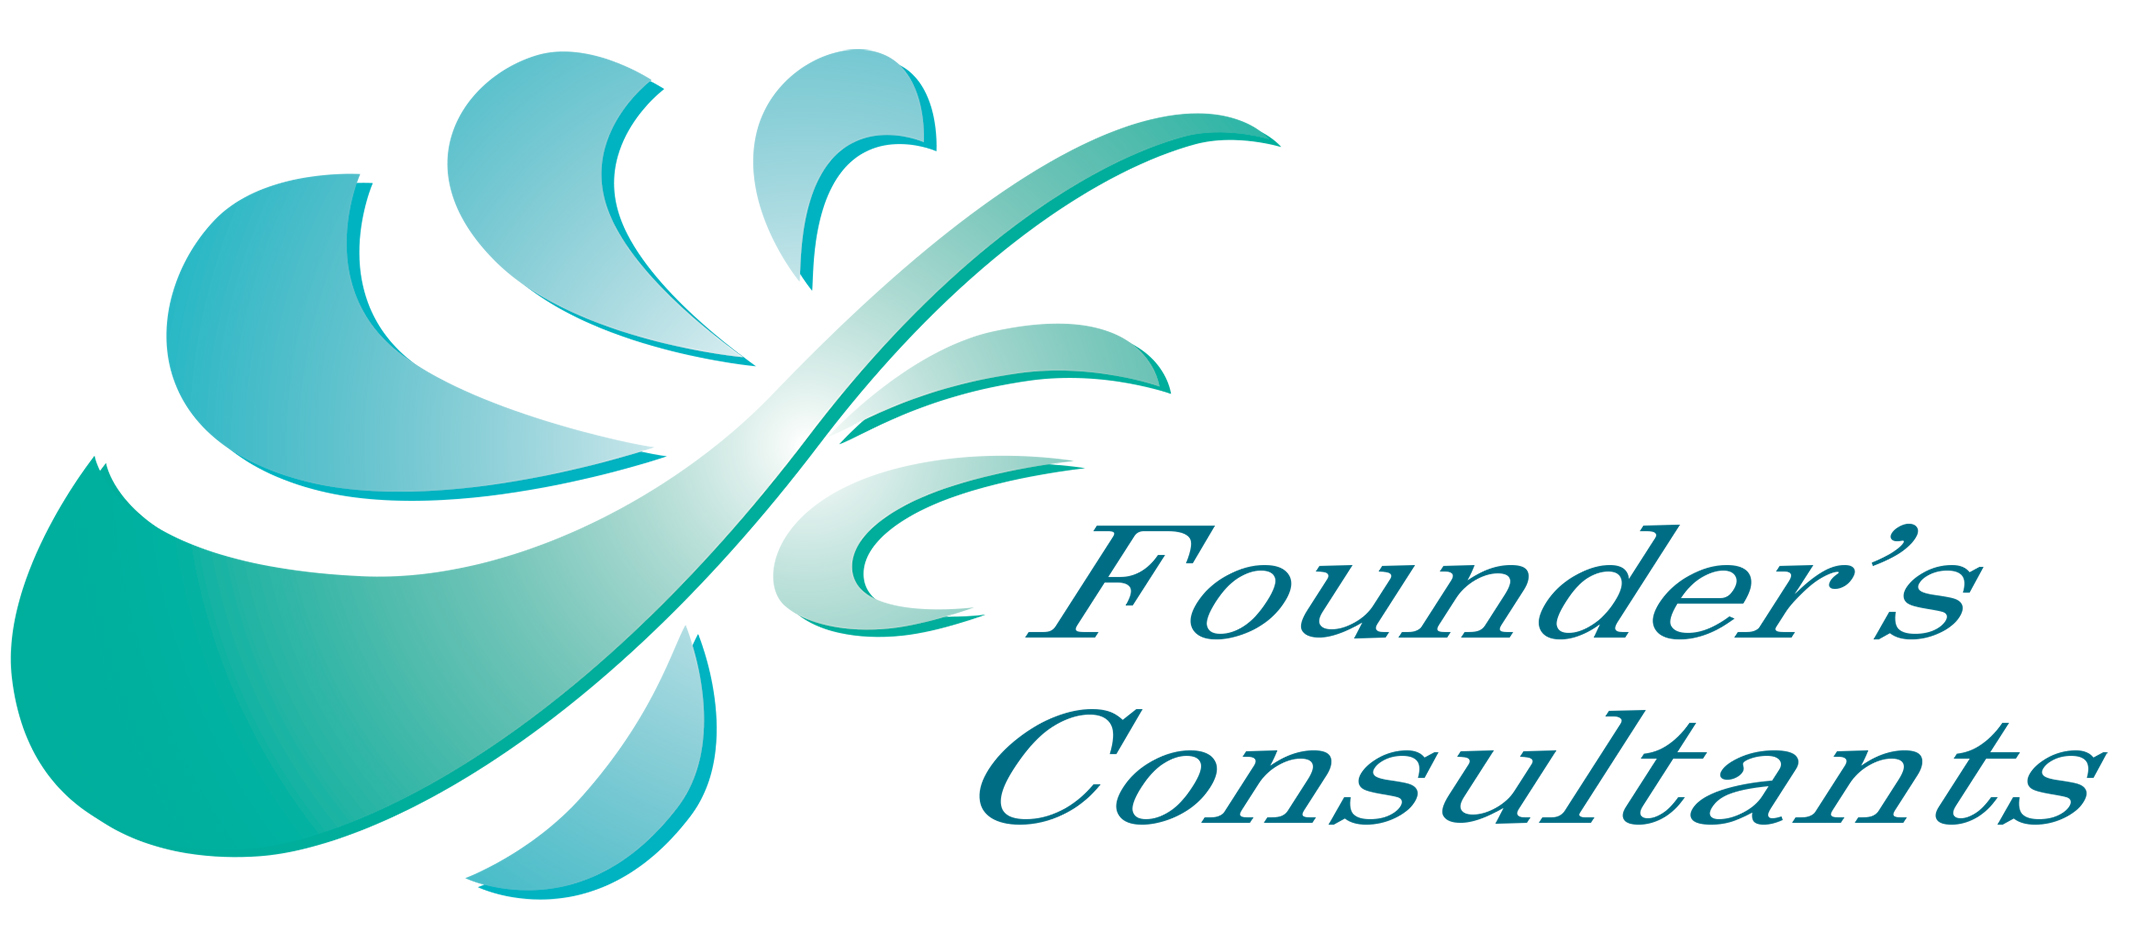 FCHD_logo